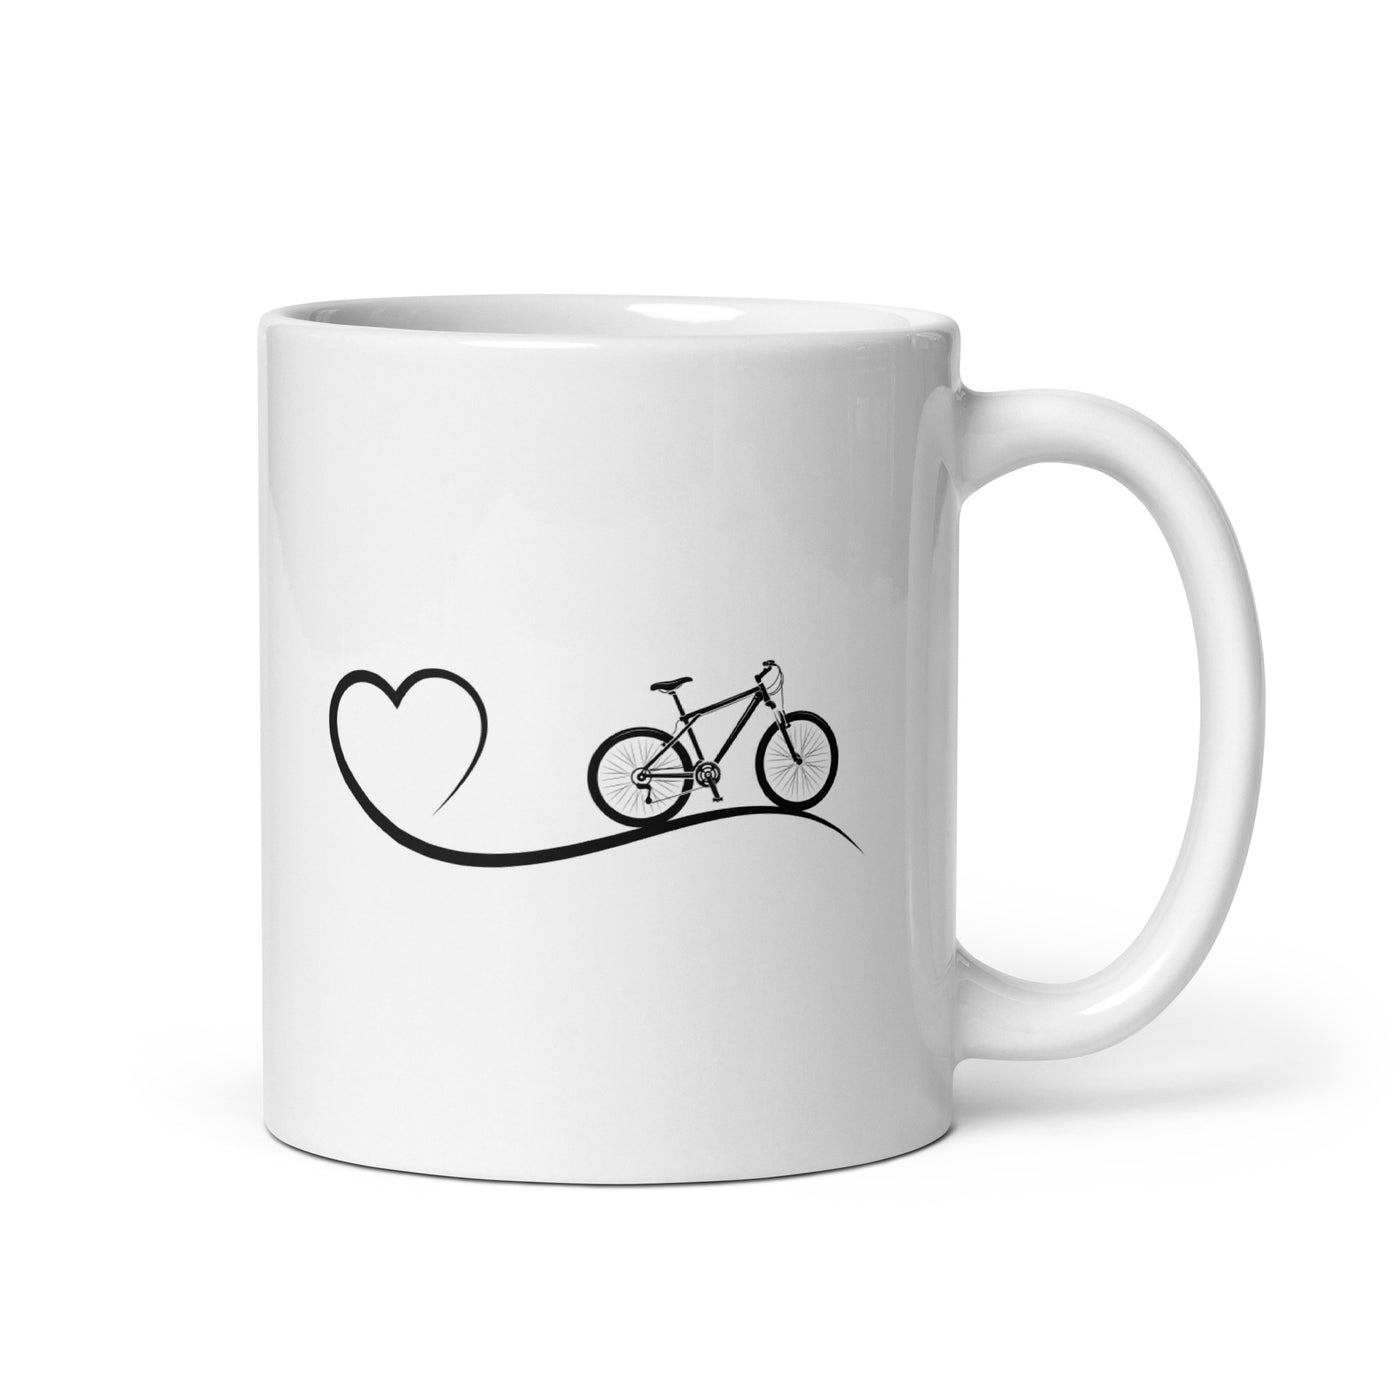 Heart 2 And Cycling - Tasse fahrrad